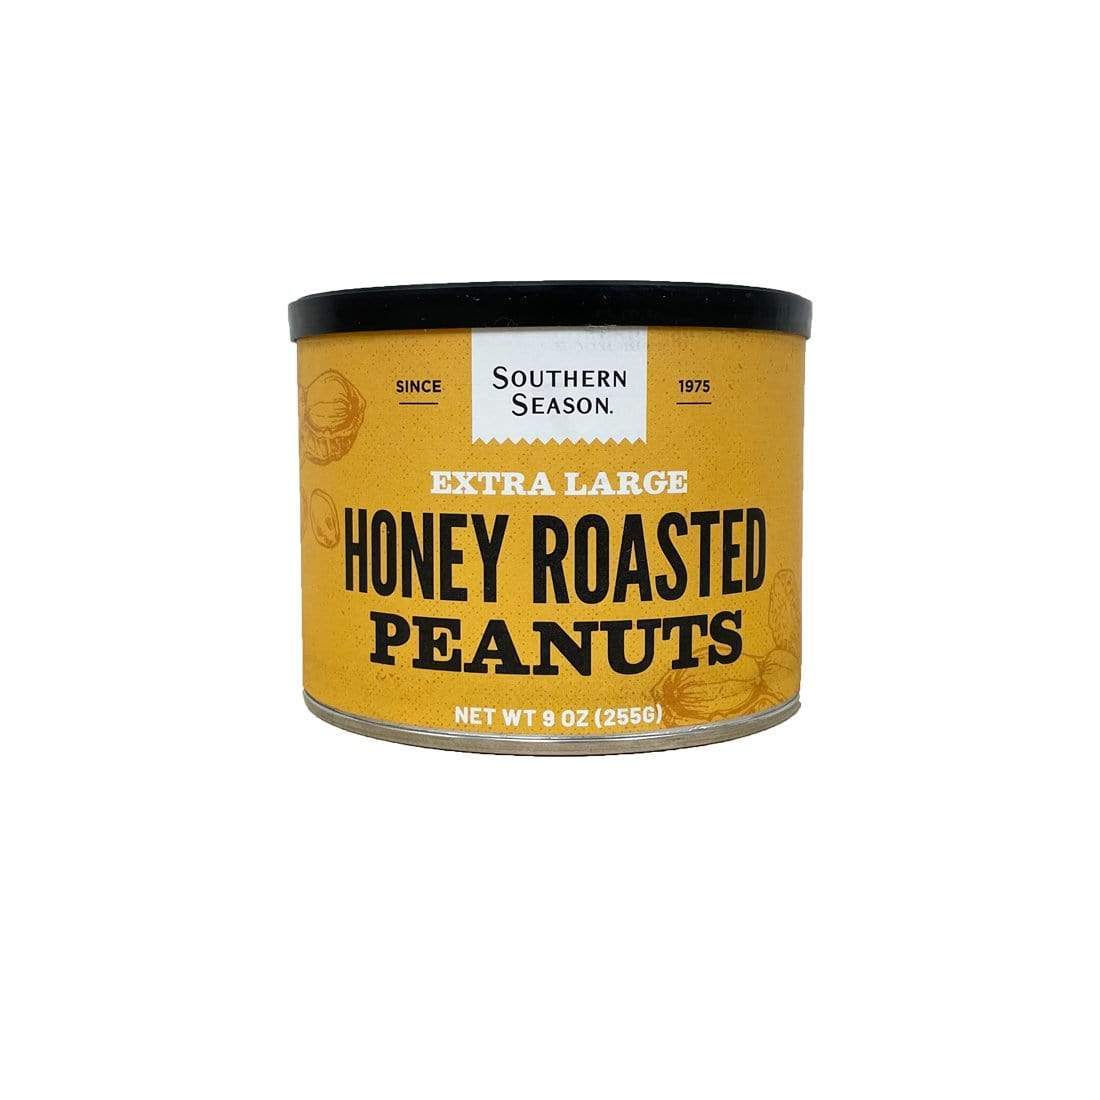 Southern Season Nuts Southern Season Honey Roasted Peanuts 9 oz